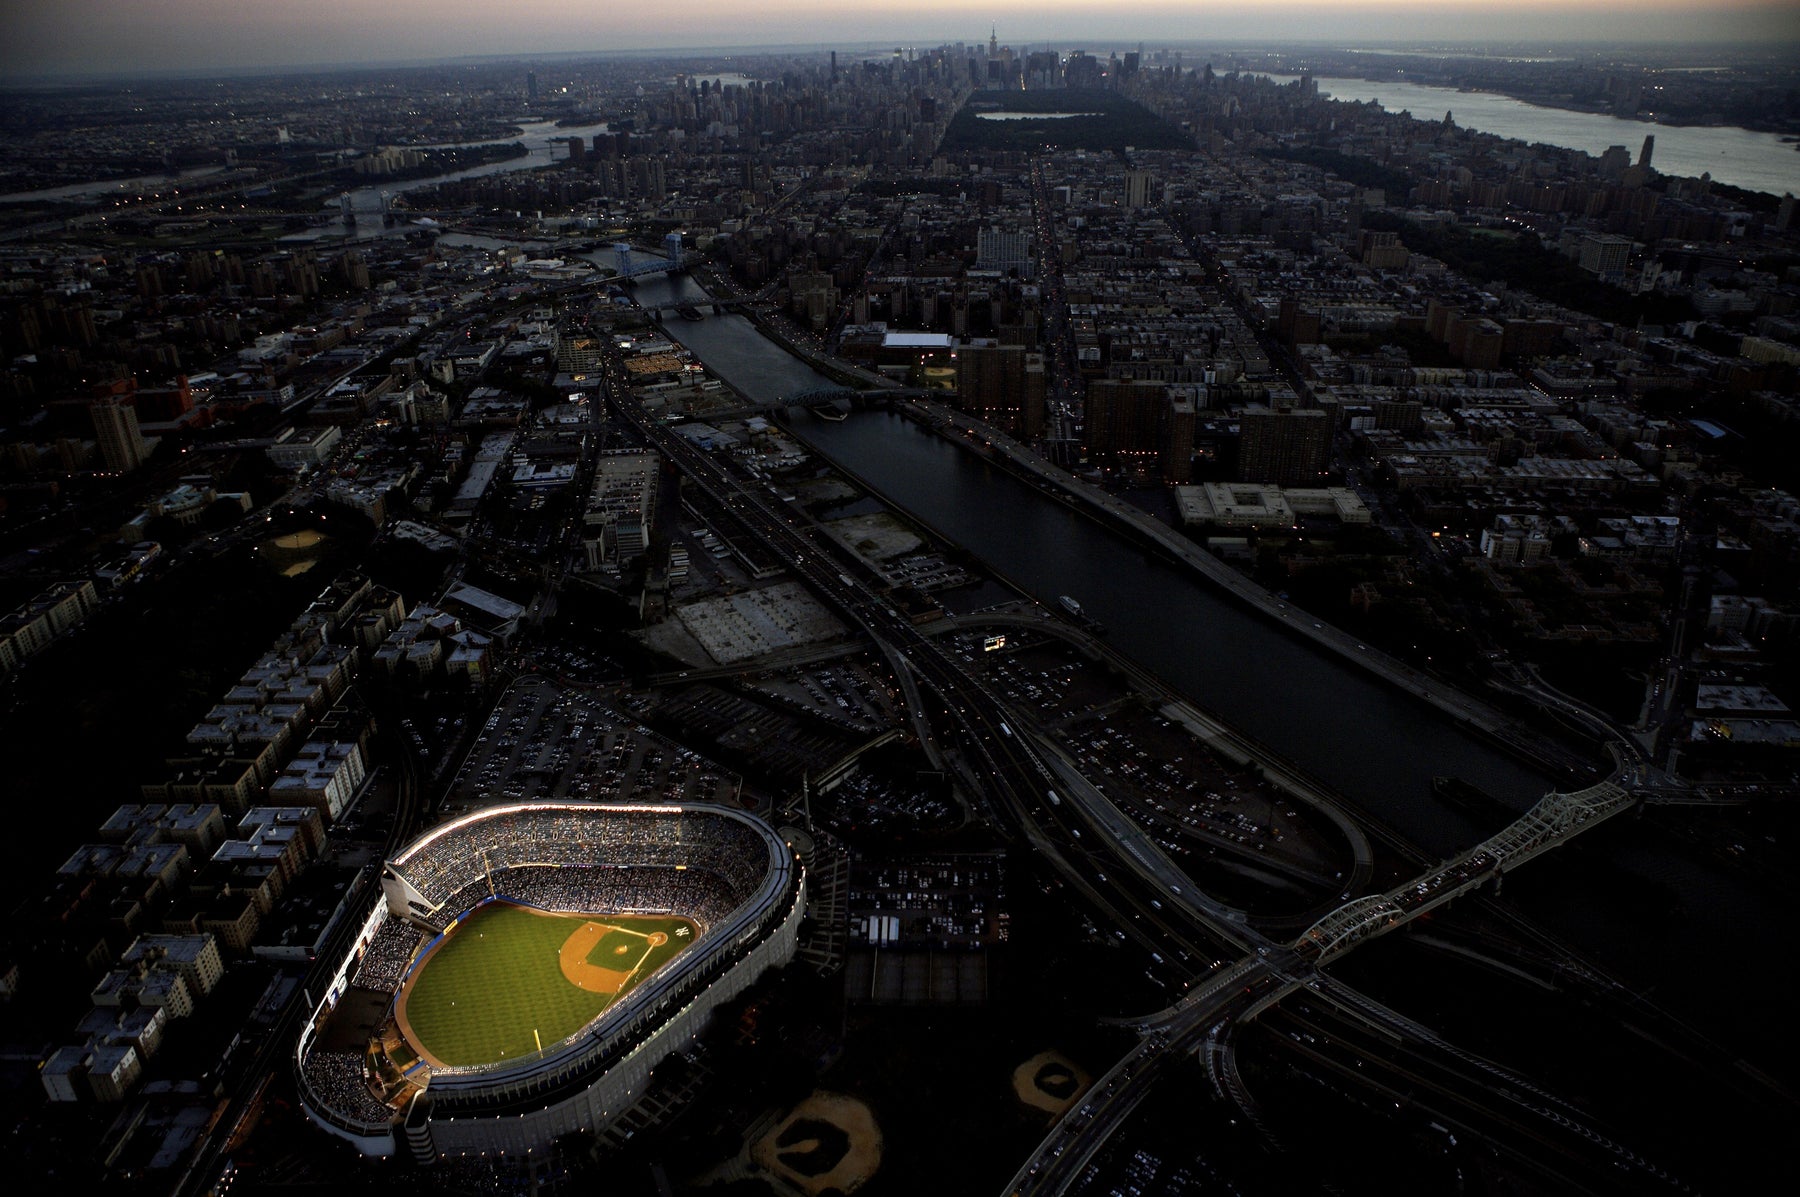 Yankee Stadium at Dusk from Fuji Blimp (Horizontal)